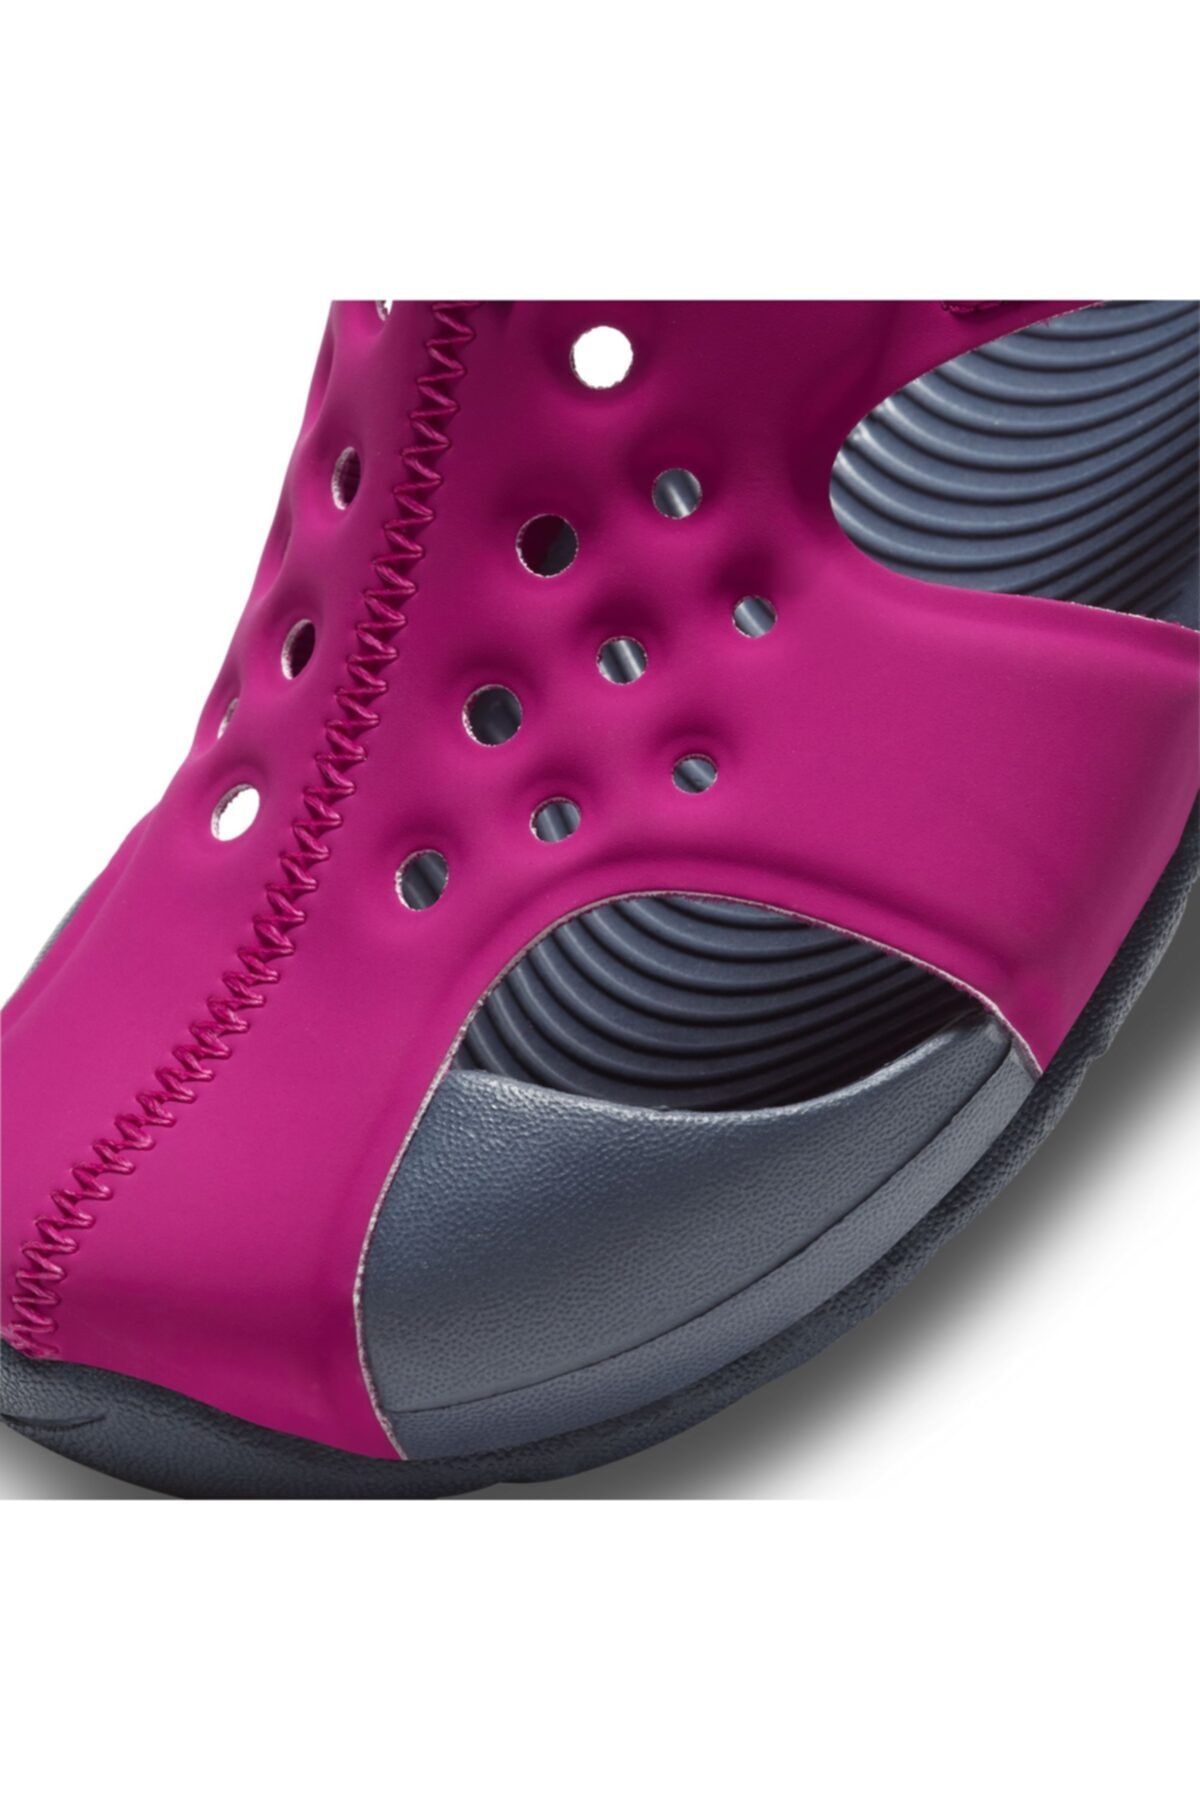 Nike Sunray Protect 2 (PS) کفش صندل کودکان 943826-604-phusia